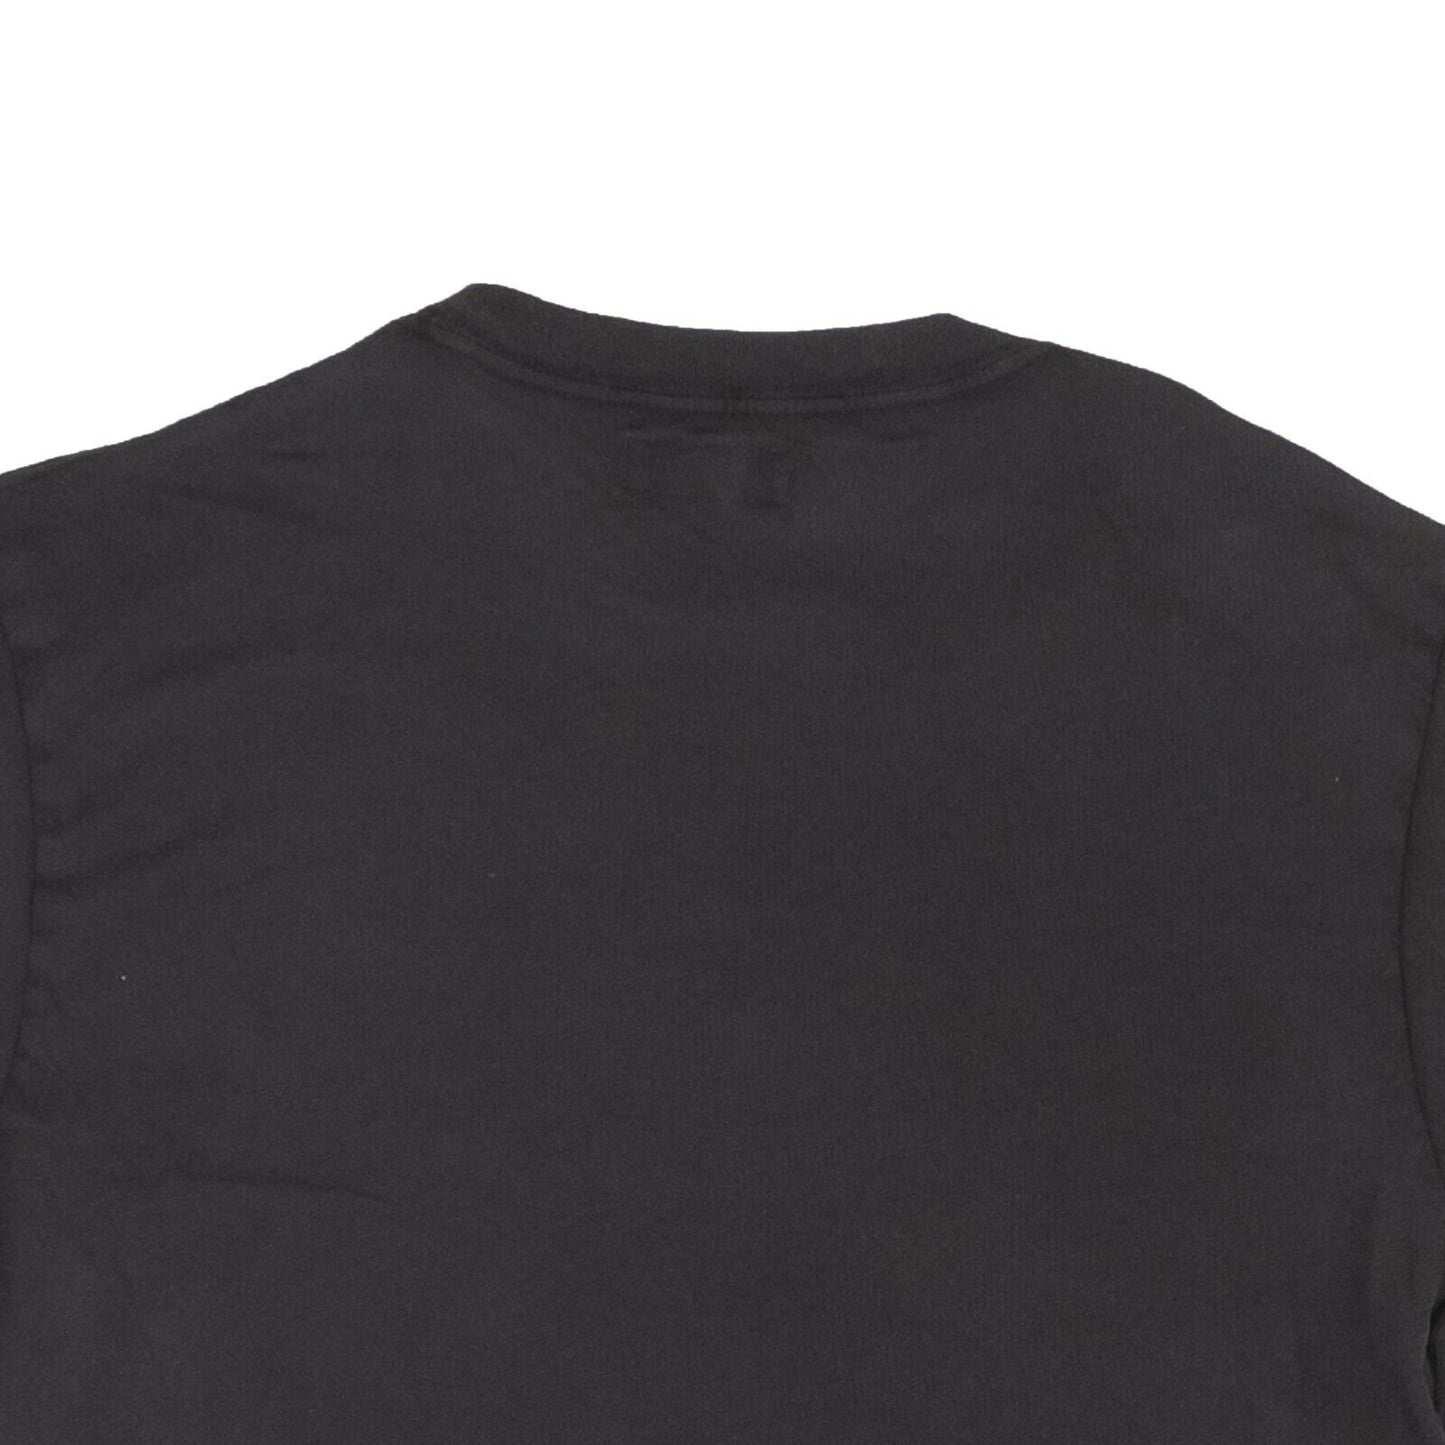 Erl Venice Print T-Shirt - Black